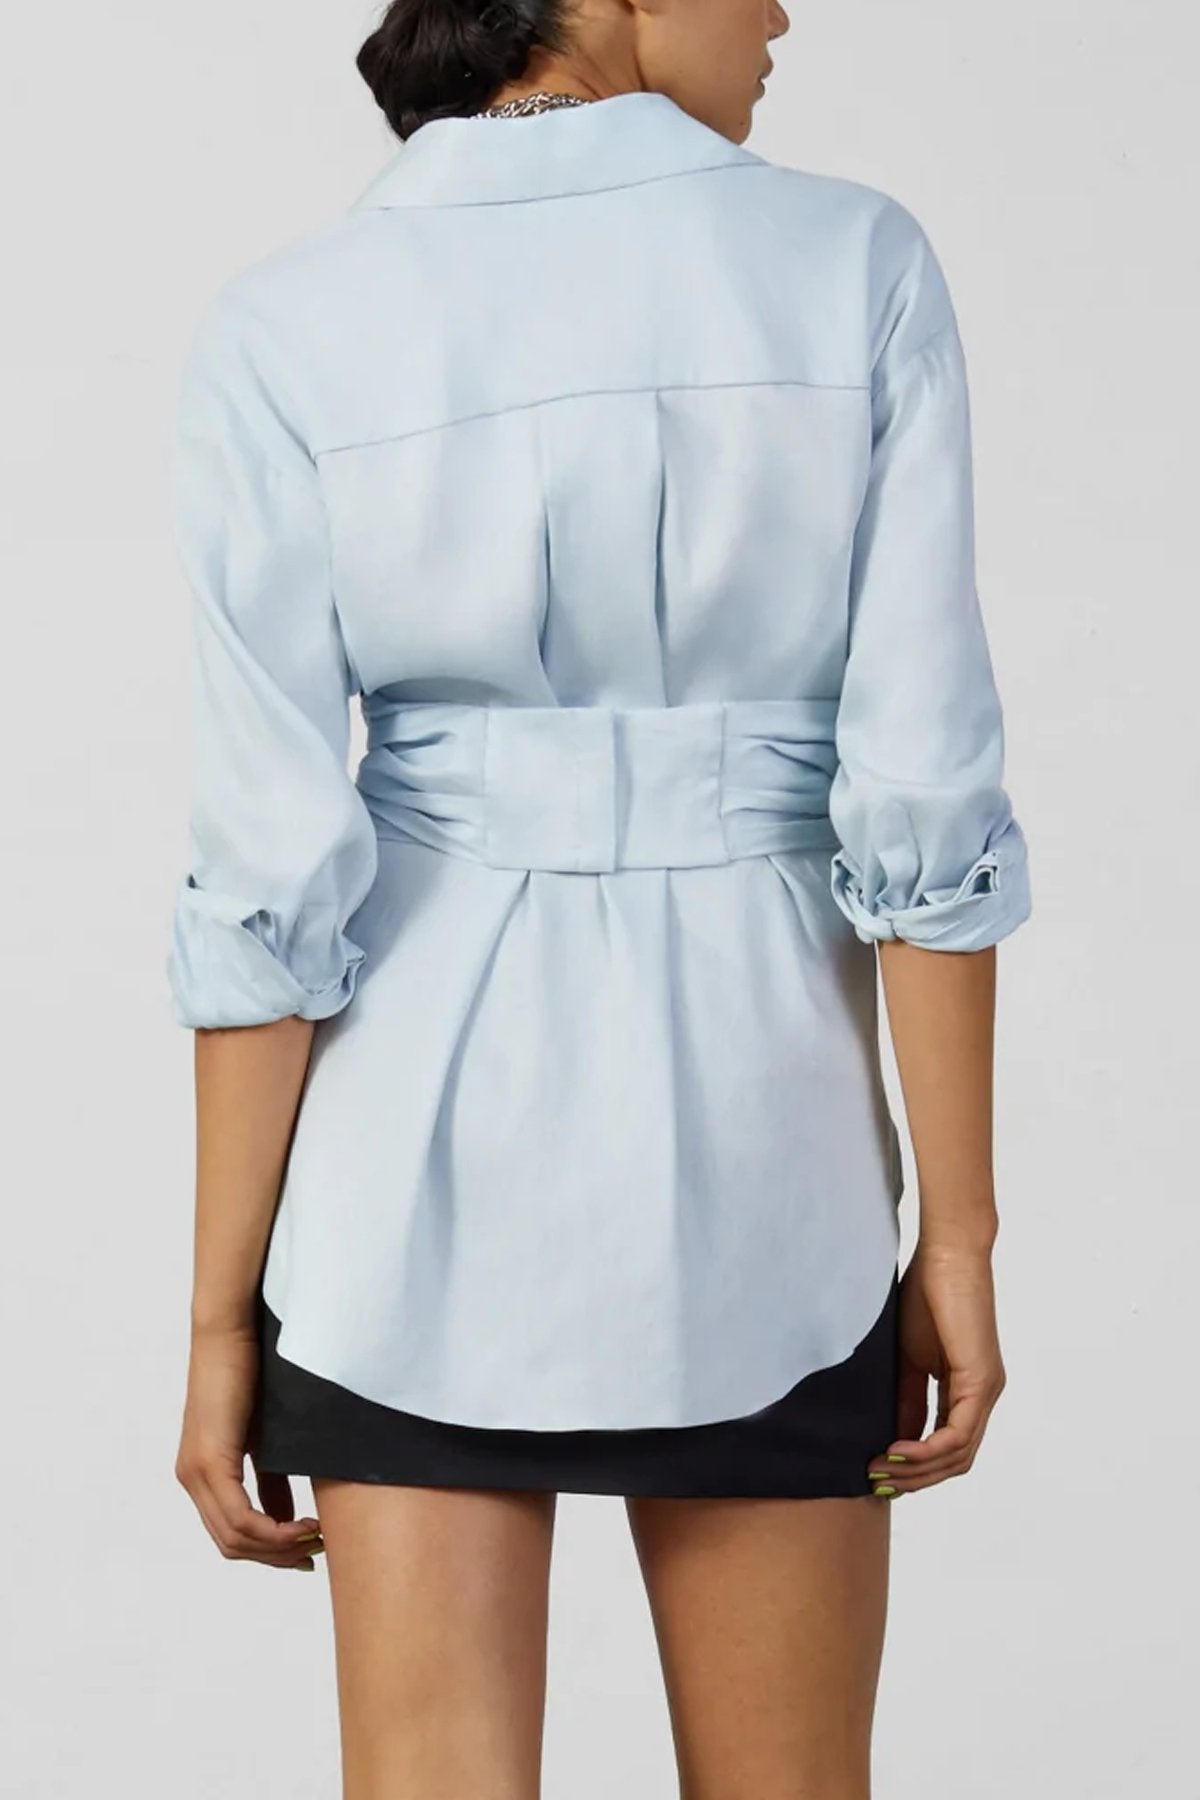 Sabinas Knit Shirt in Steel Grey - shop-olivia.com